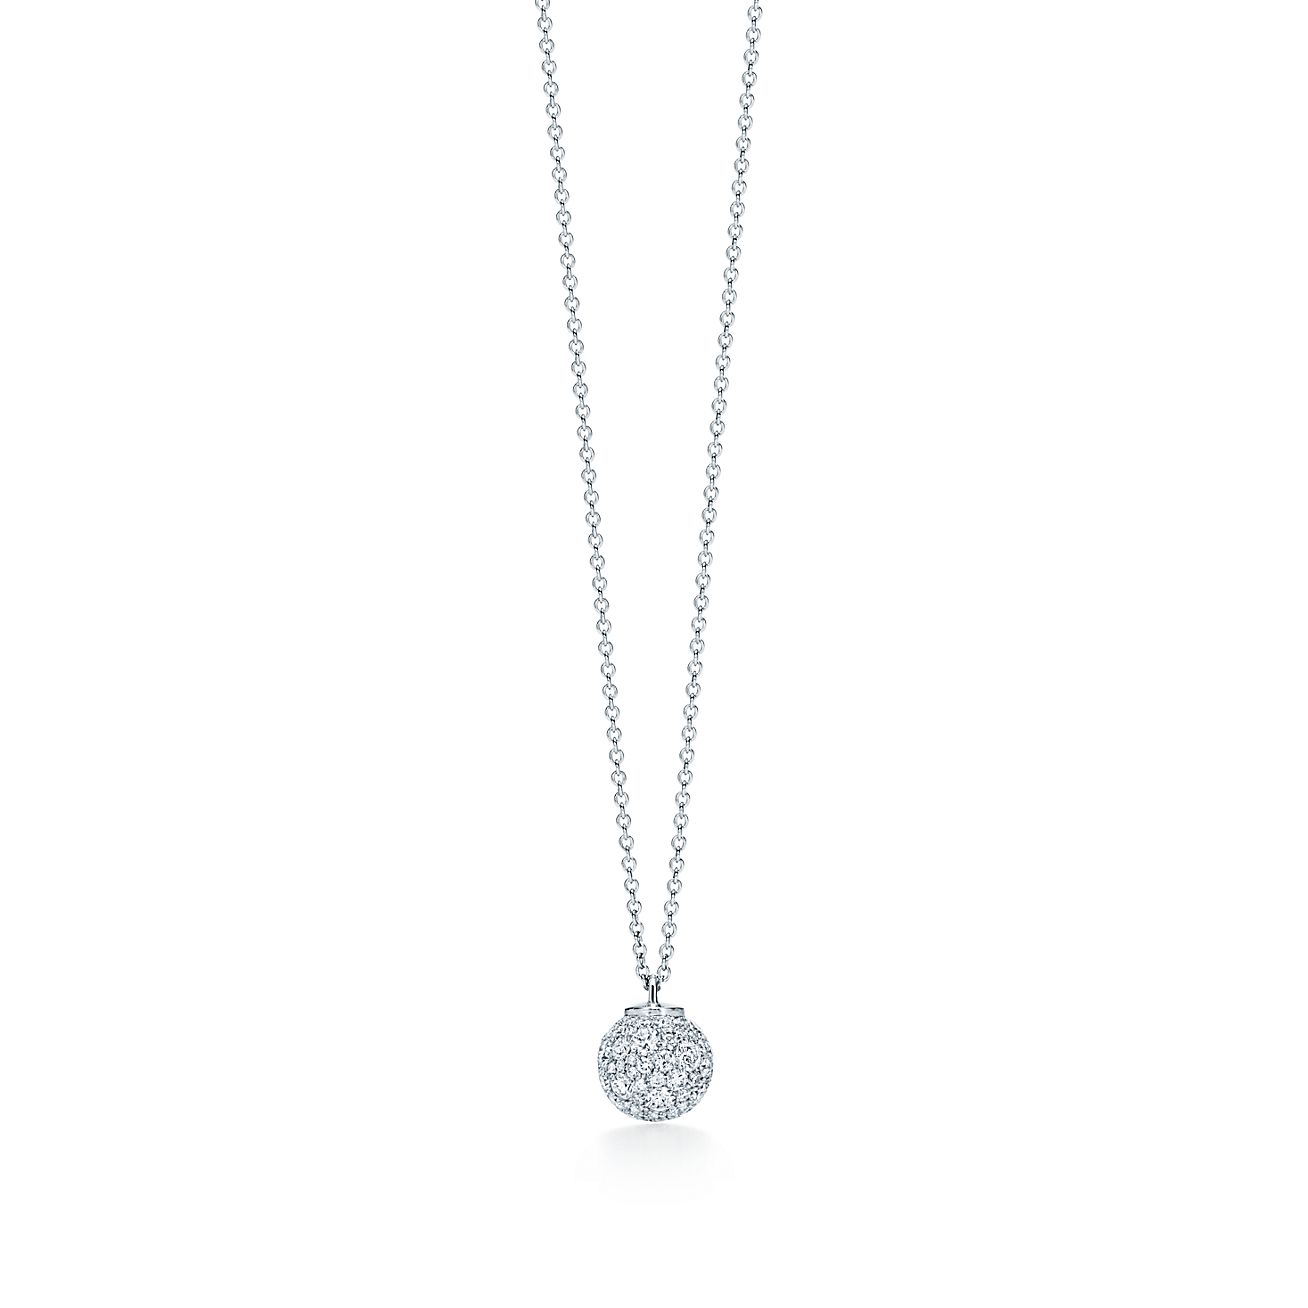 tiffany silver ball necklace